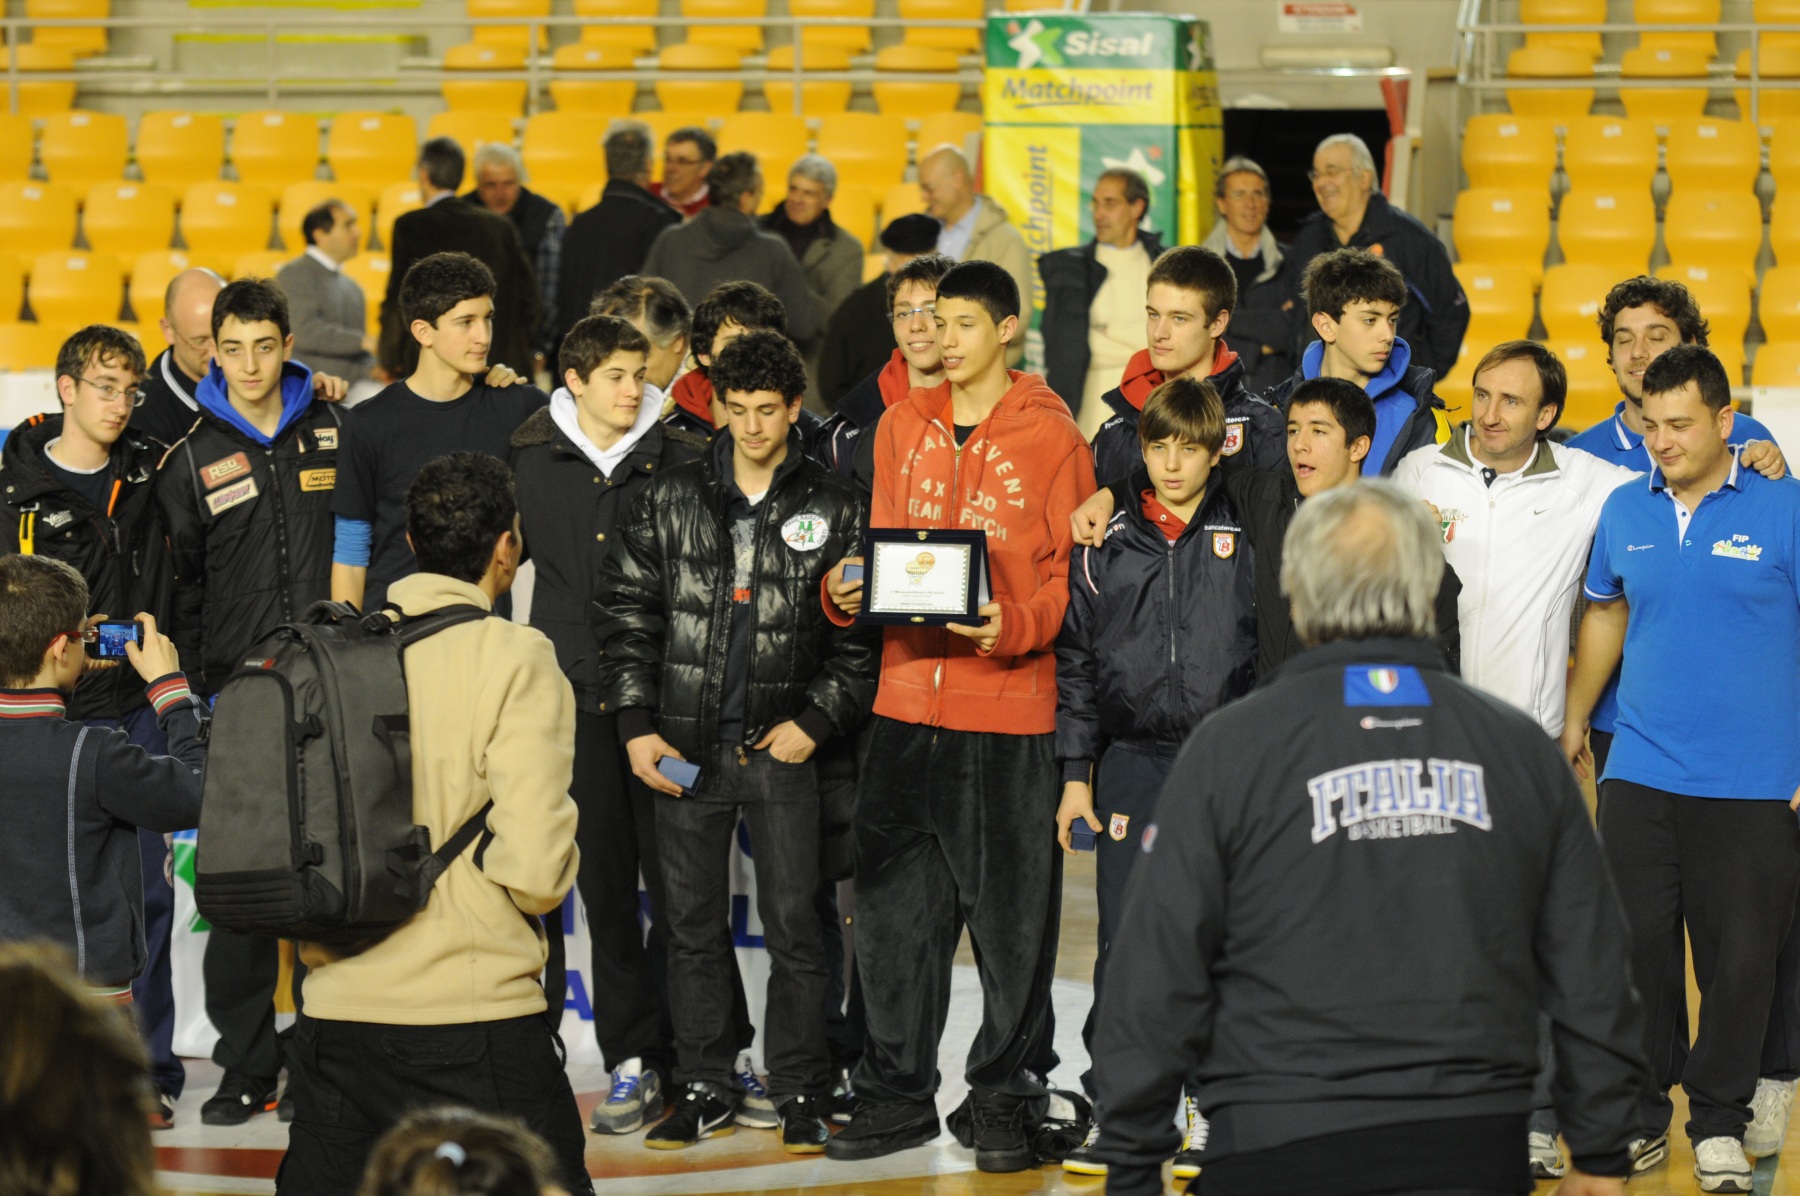 2010-02-29-Trofeo-Asteo-Lazio-Toscana-813